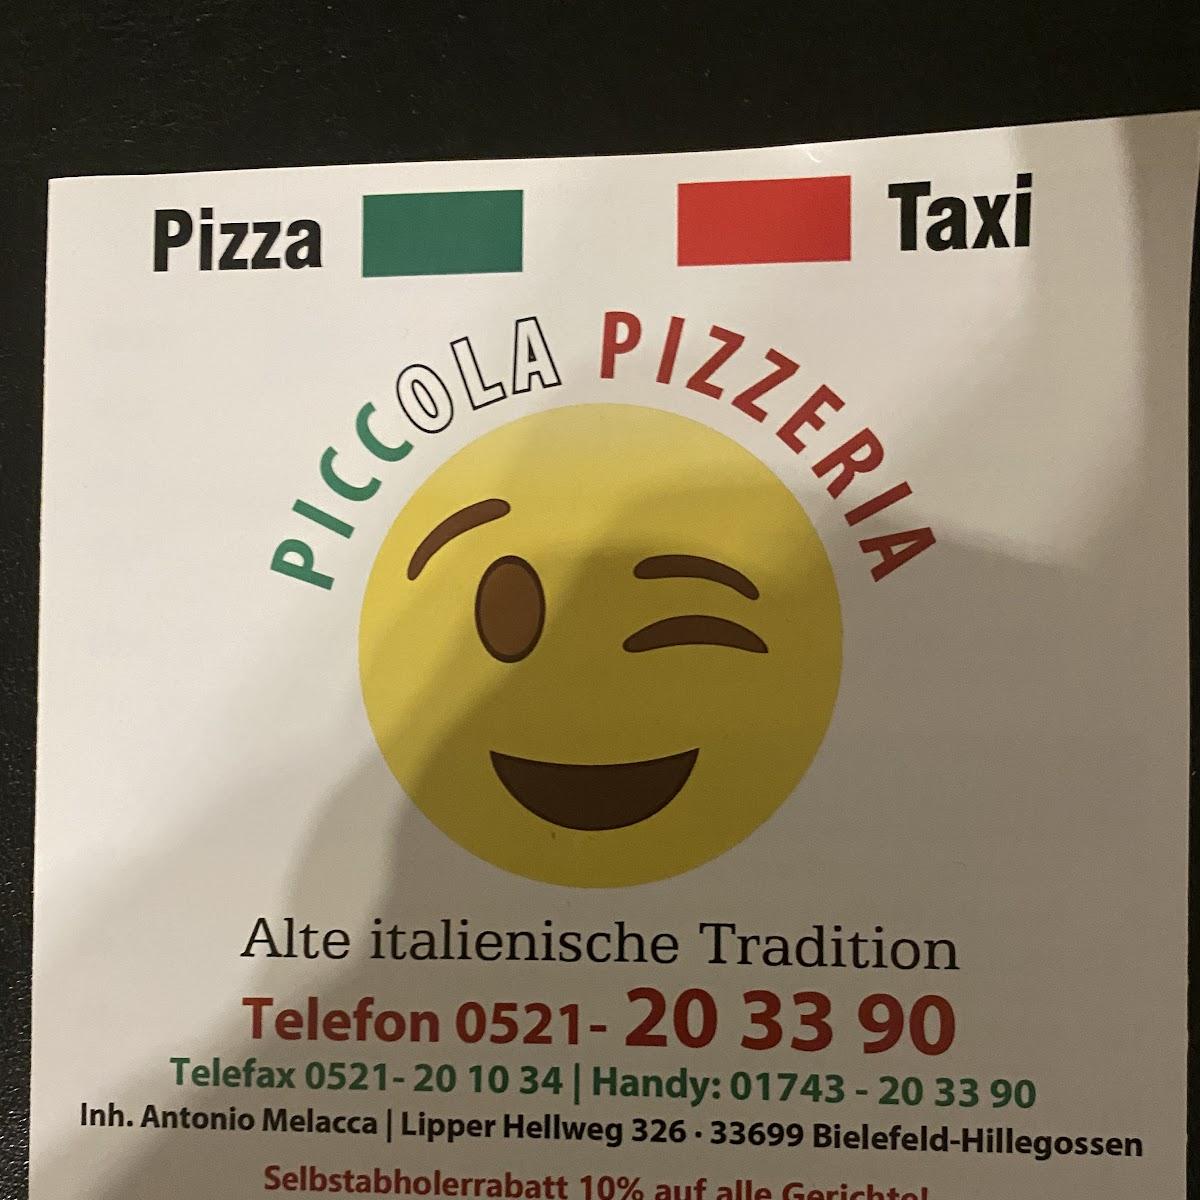 Restaurant "Pizzeria Piccola" in Bielefeld